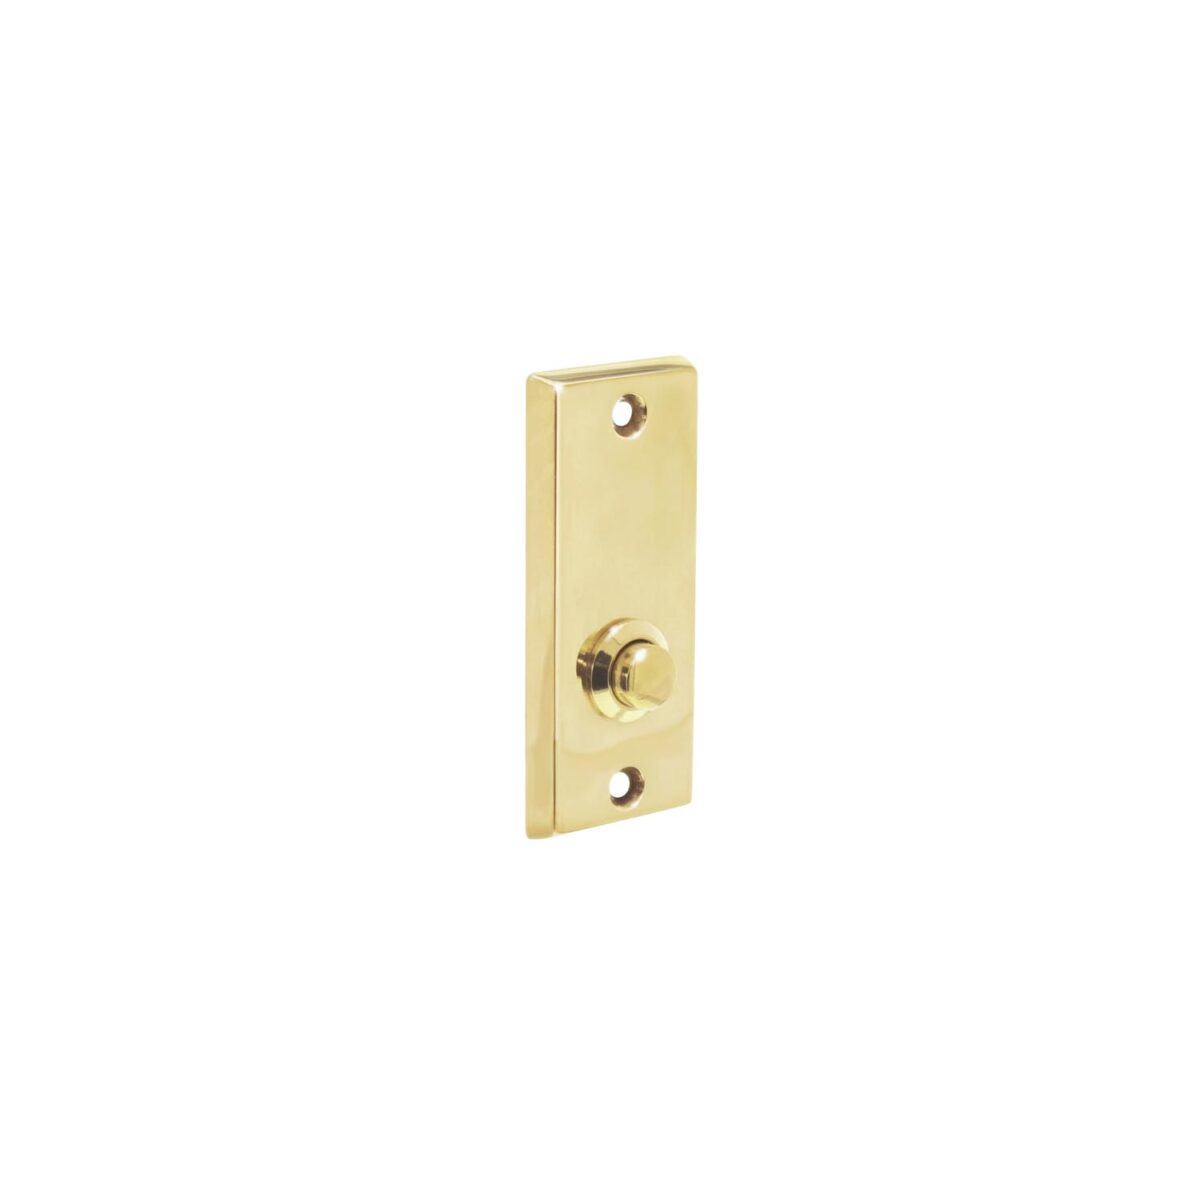 doorbell rectangular brass, doorbell, ring doorbell, doorbells, pull bell, ding dong doorbell, doorbell set